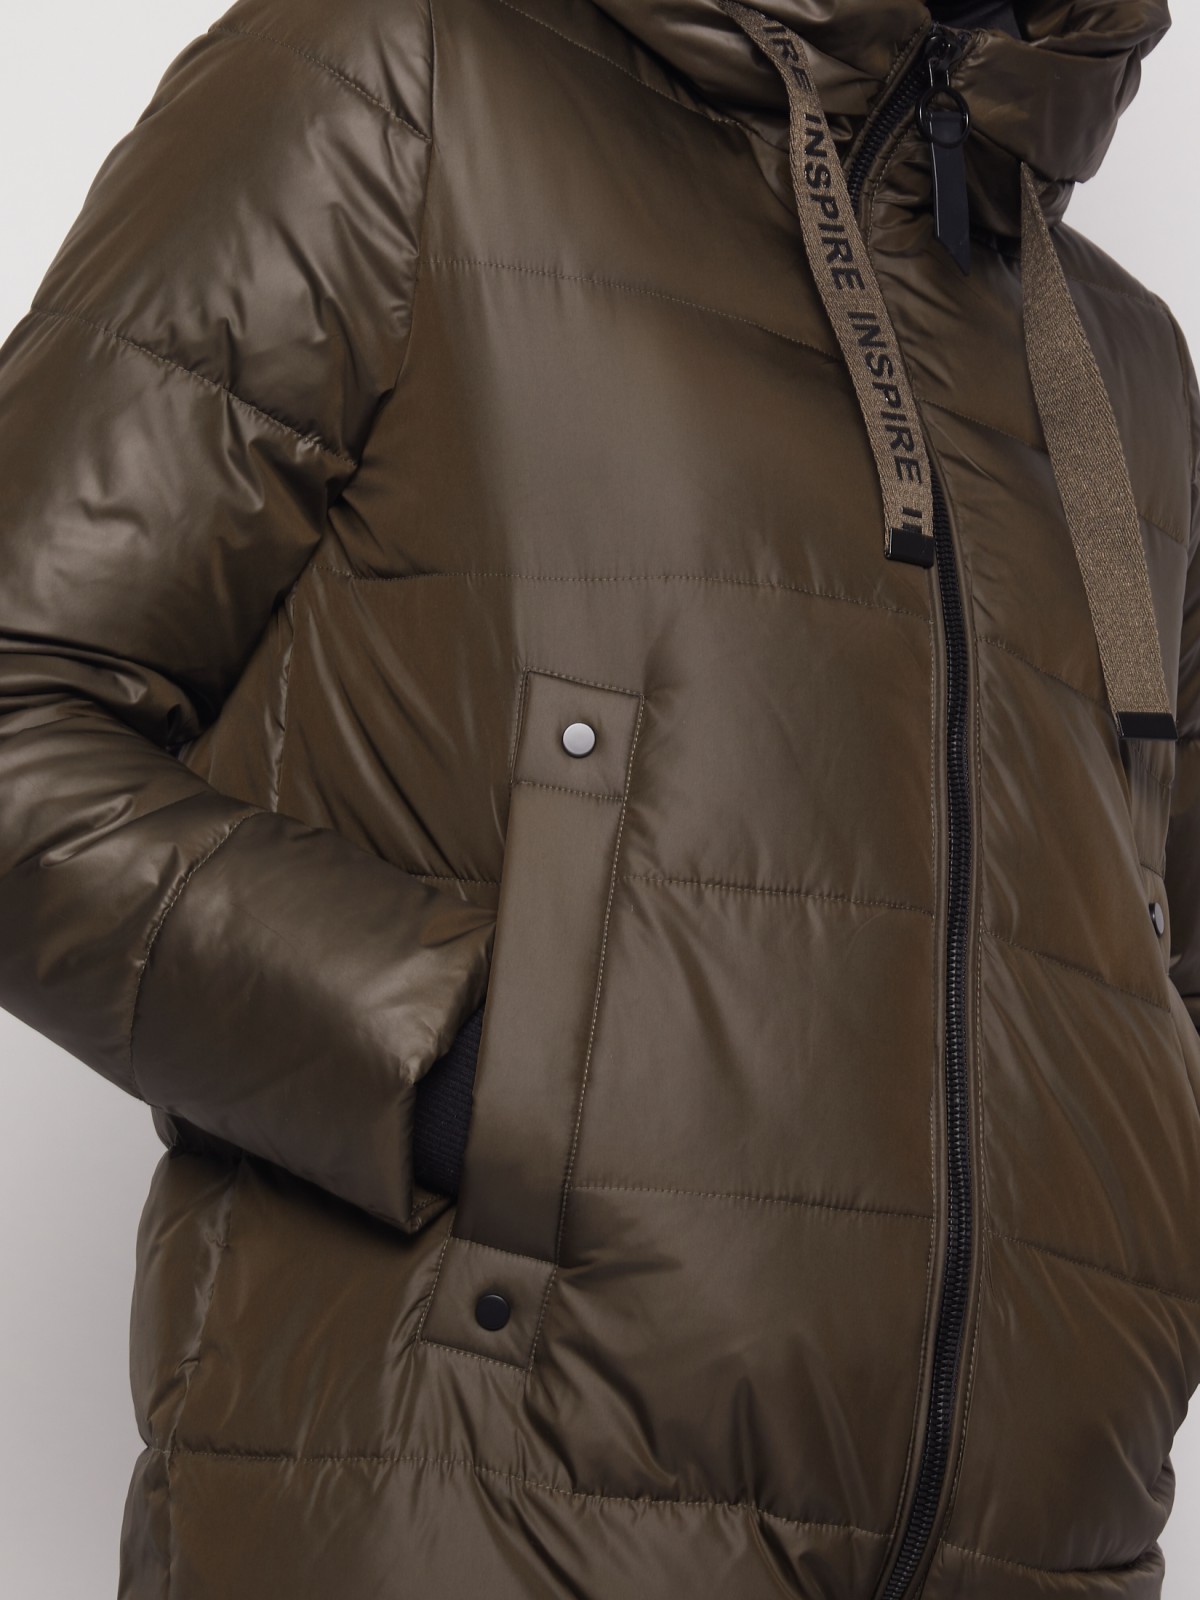 Утеплённое пальто с капюшоном zolla 020345212064, цвет хаки, размер XS - фото 3